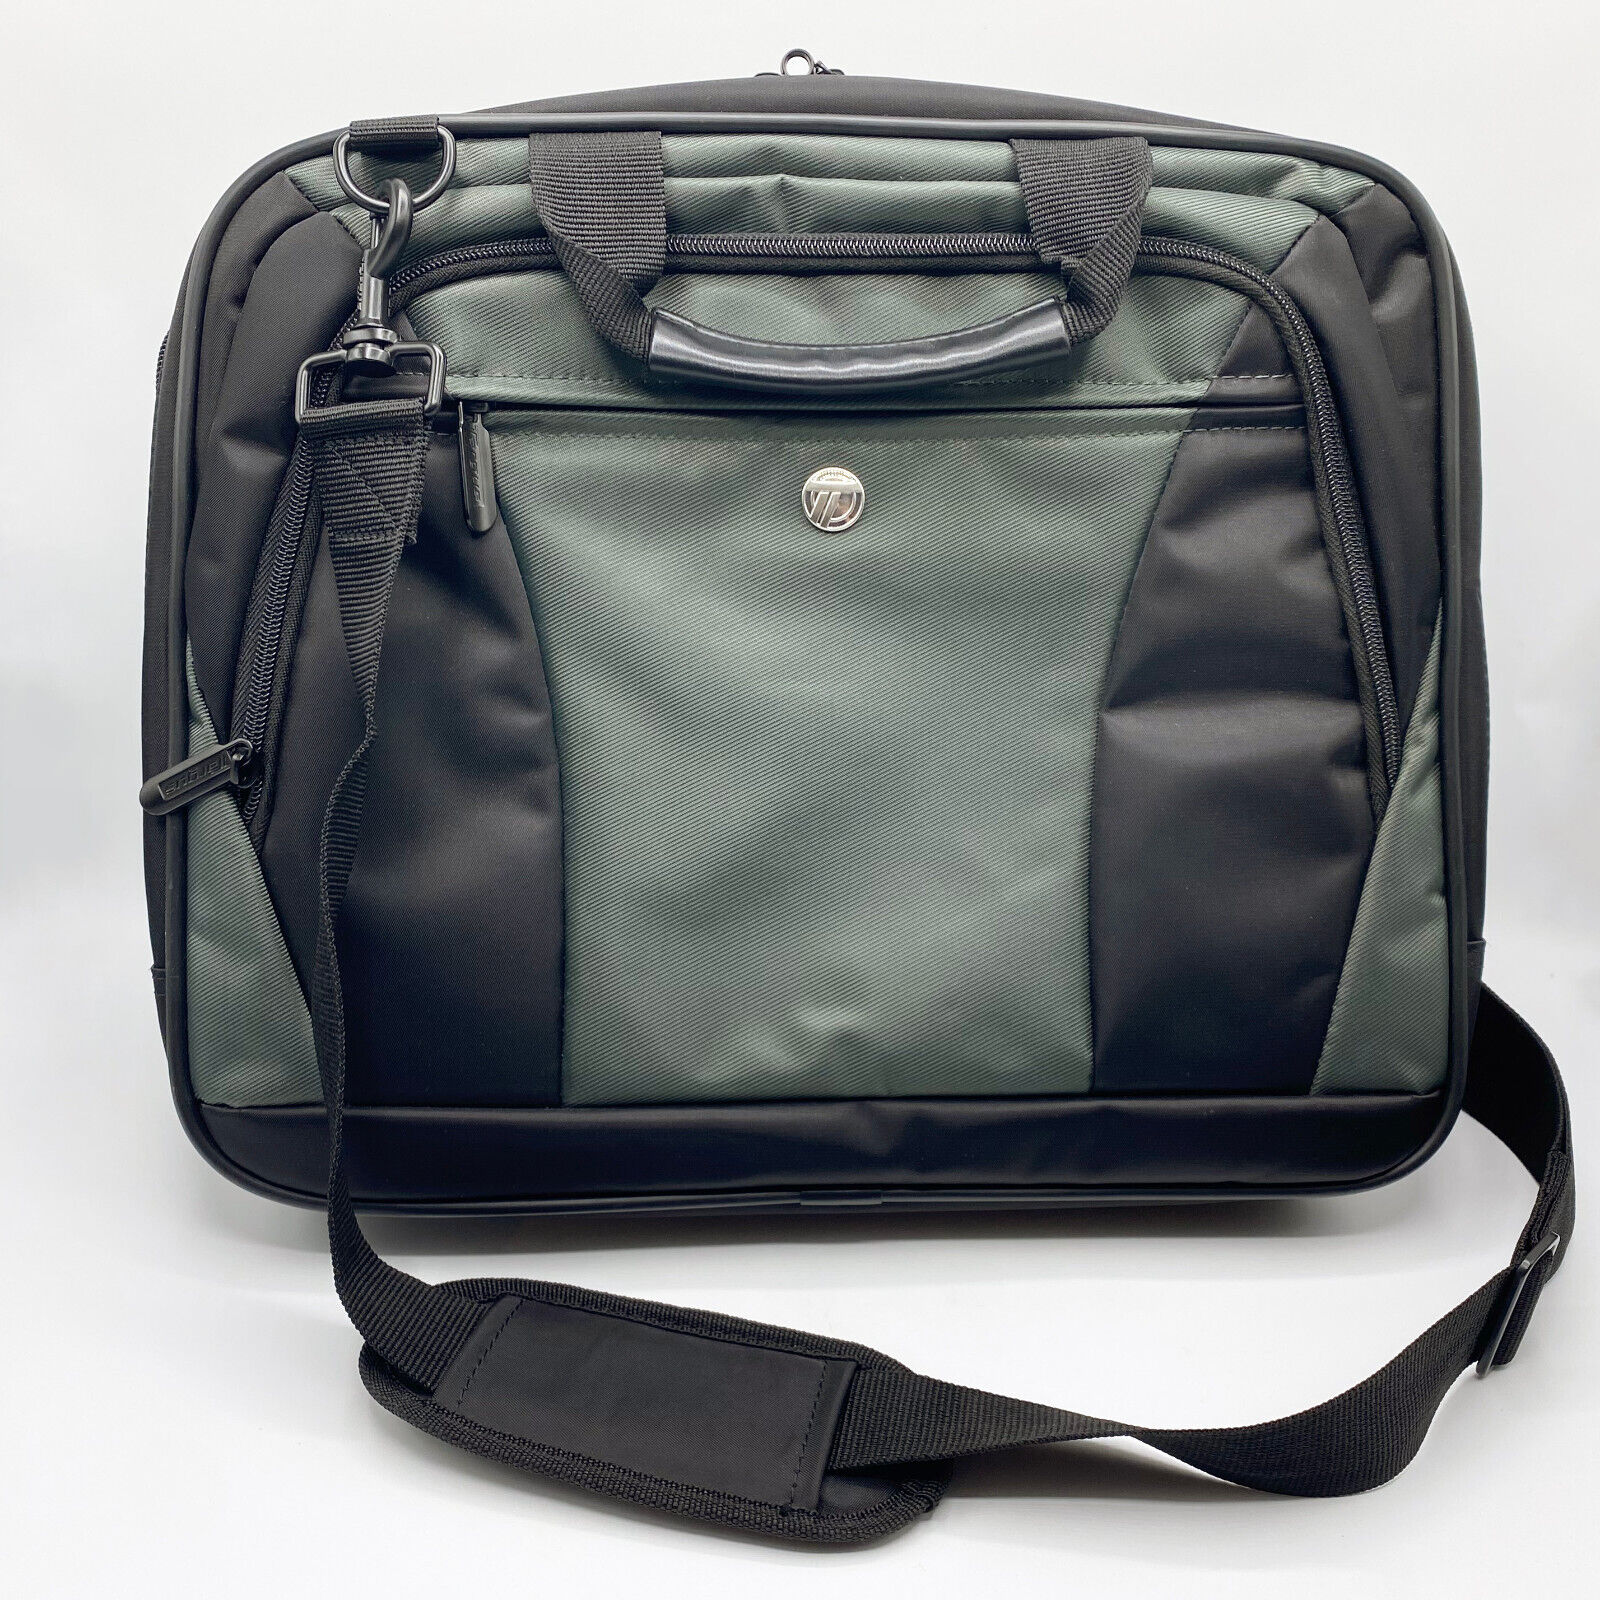 TARGUS CityLite CVR400 Briefcase 14 inch Laptop Bag Carry On - Gray Green Black